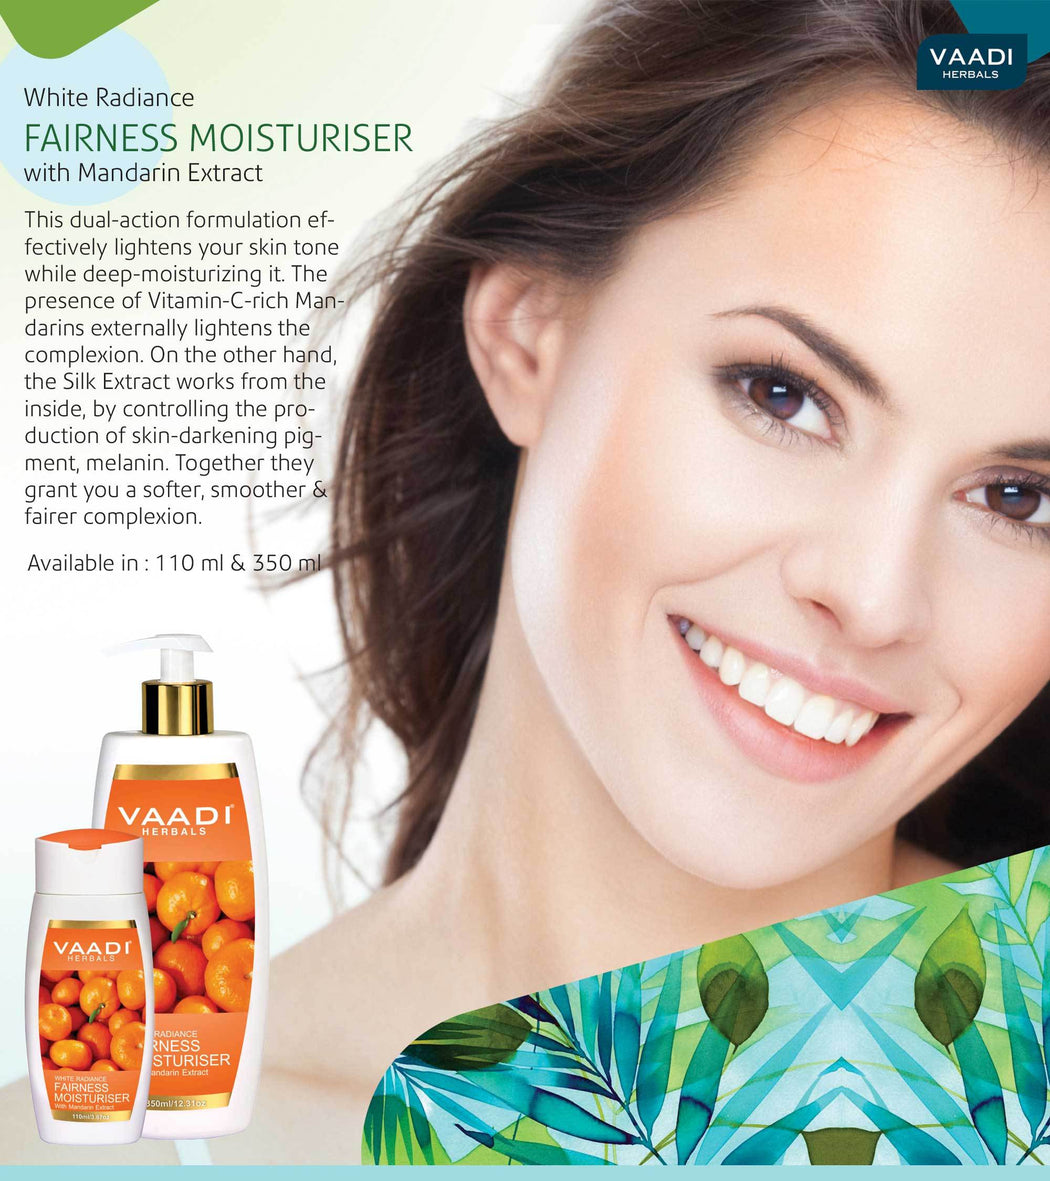 Organic Fairness Moisturiser with Mandarin Extract - Vitamin C Rich - Lightens Skin Tone - Controls Pigmentation (3 x 110 ml/ 4 fl oz)